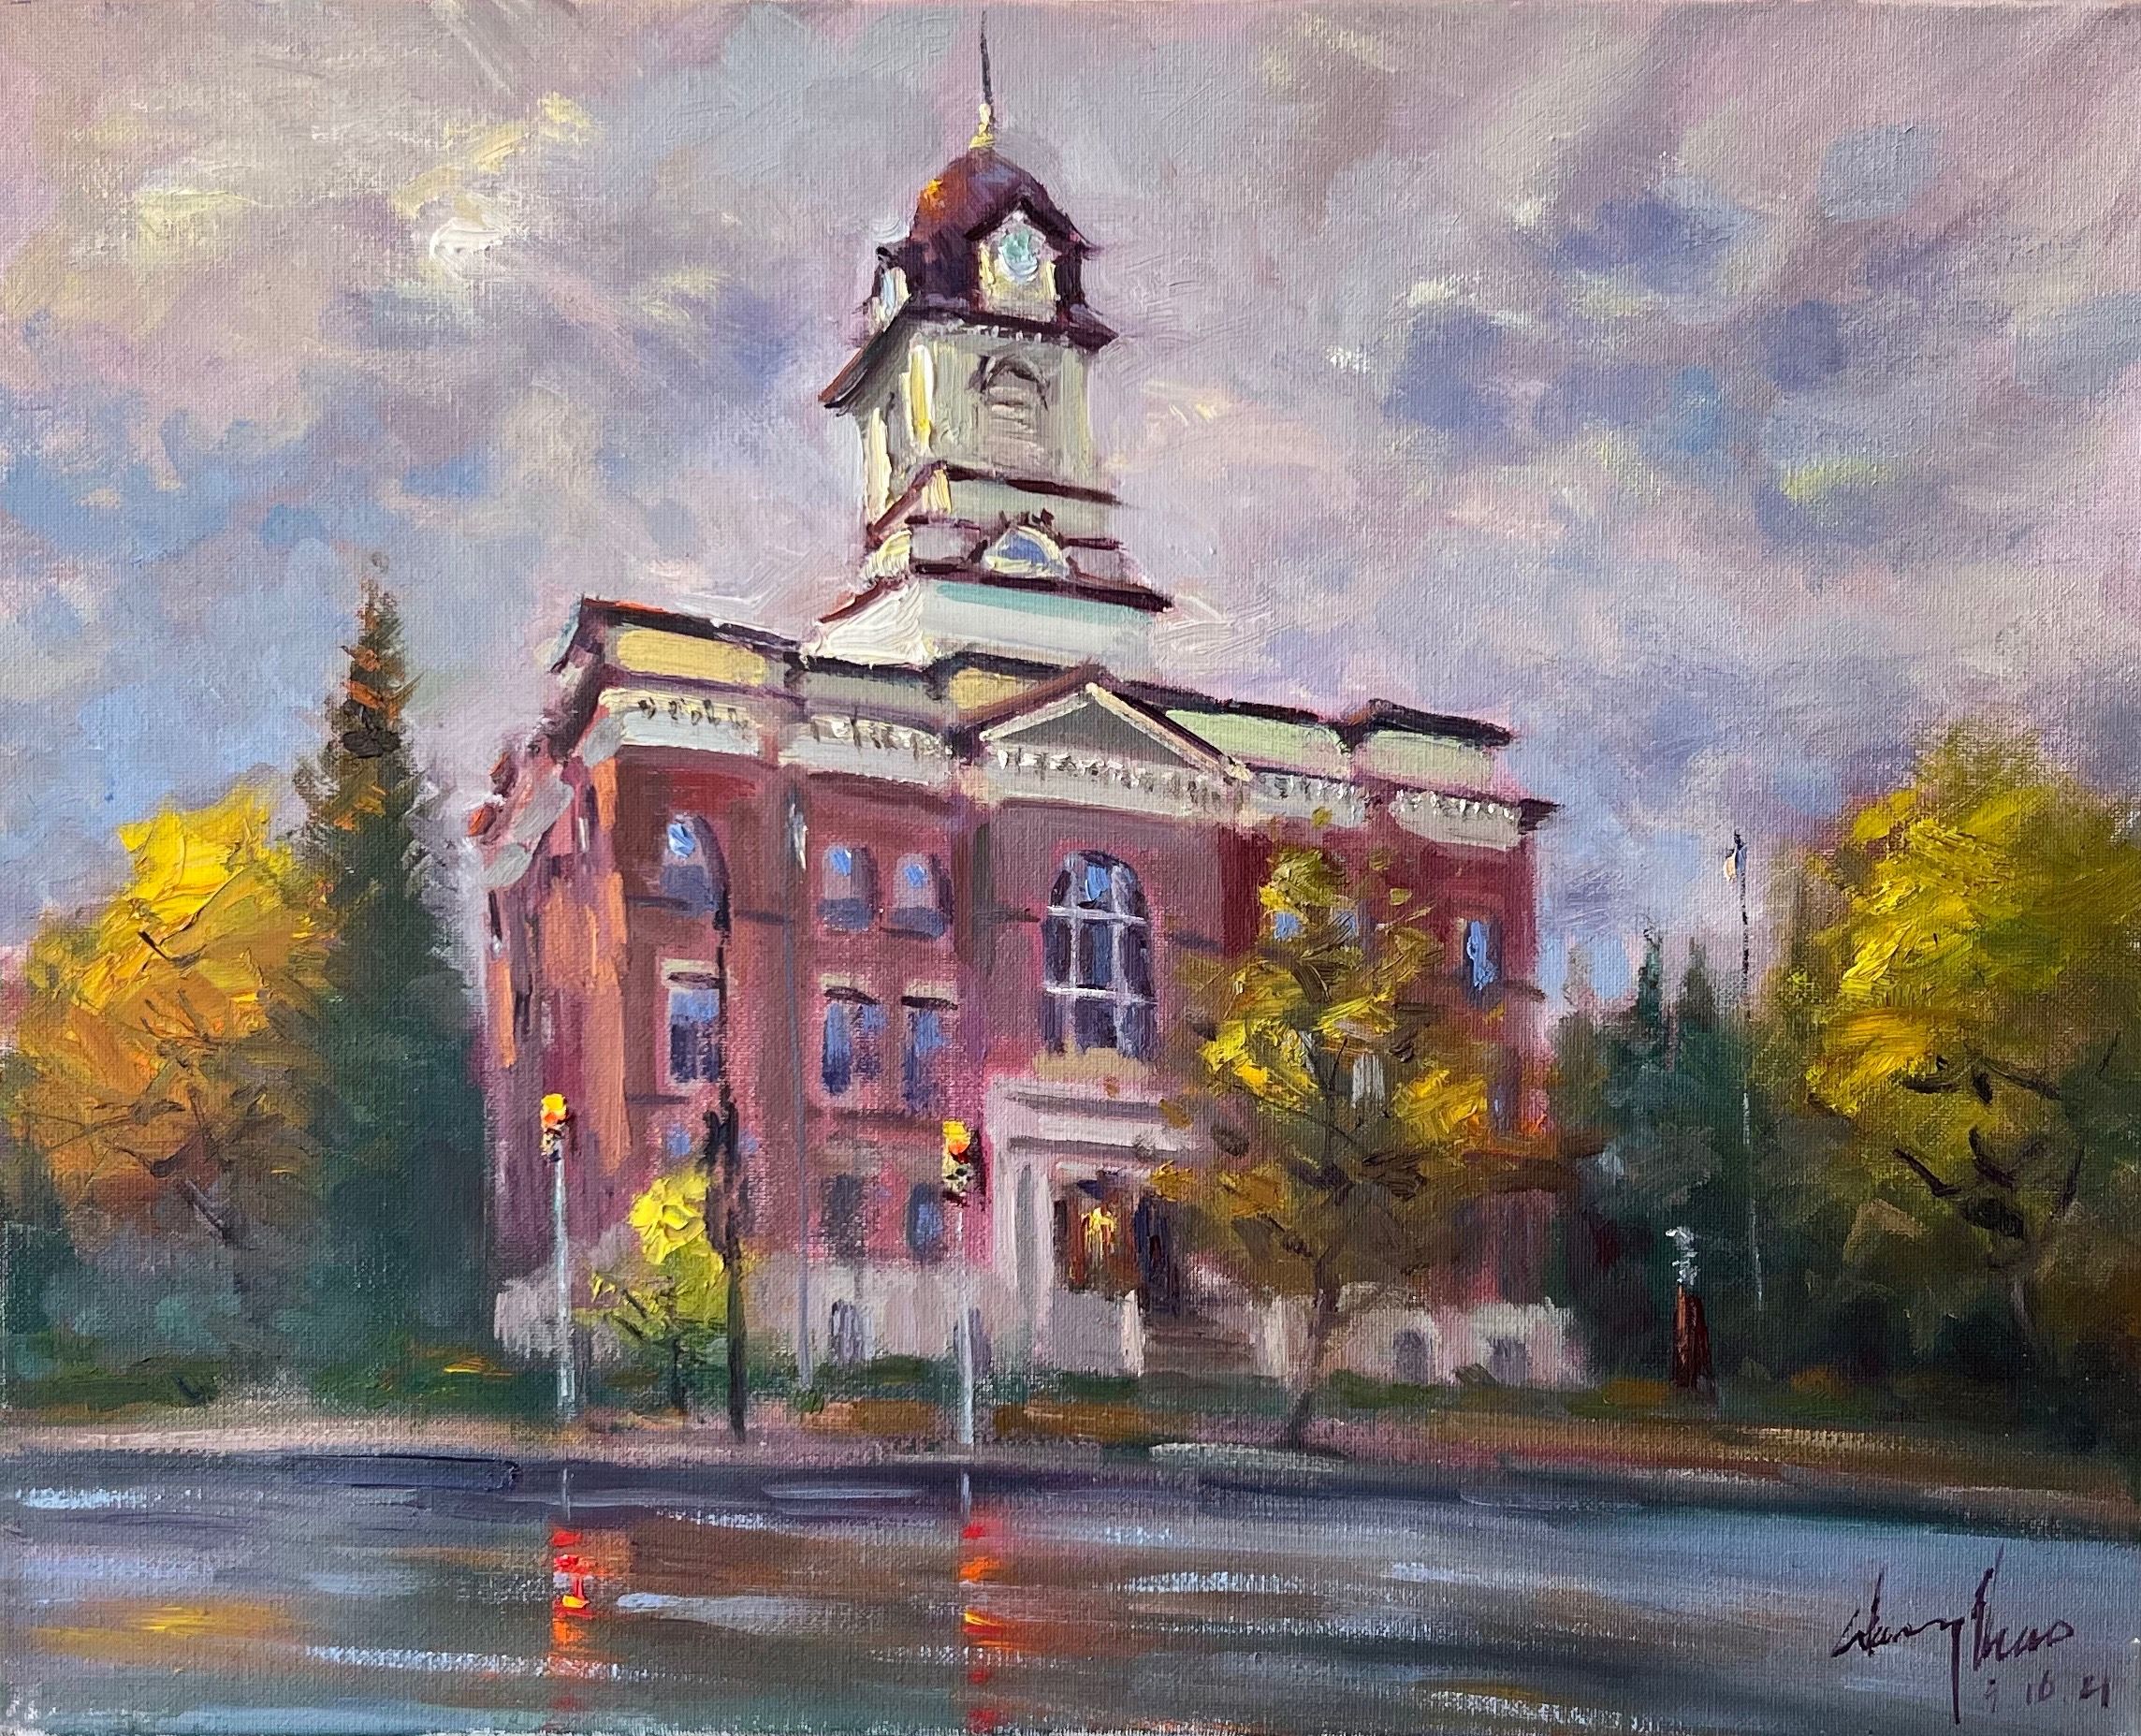 St. Boniface City Hall on a Rainy Morning